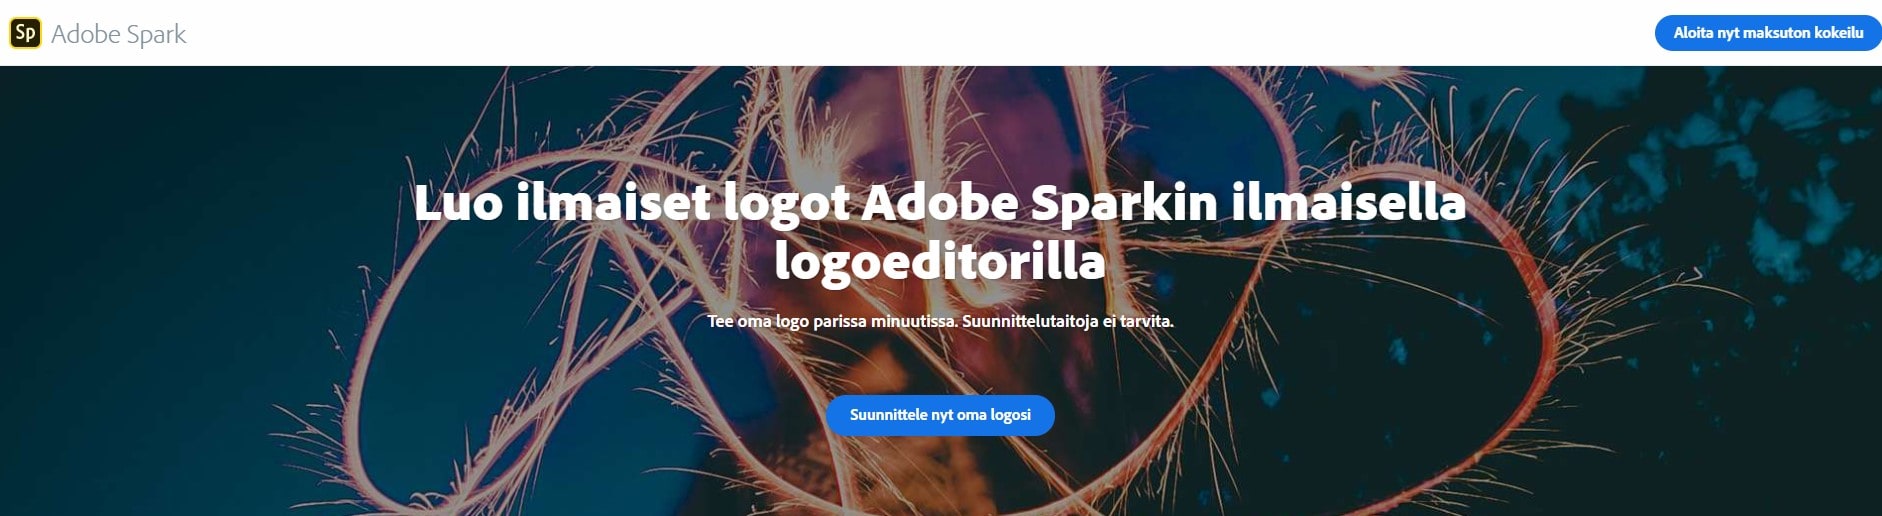 Adobe Spark_overview_fi